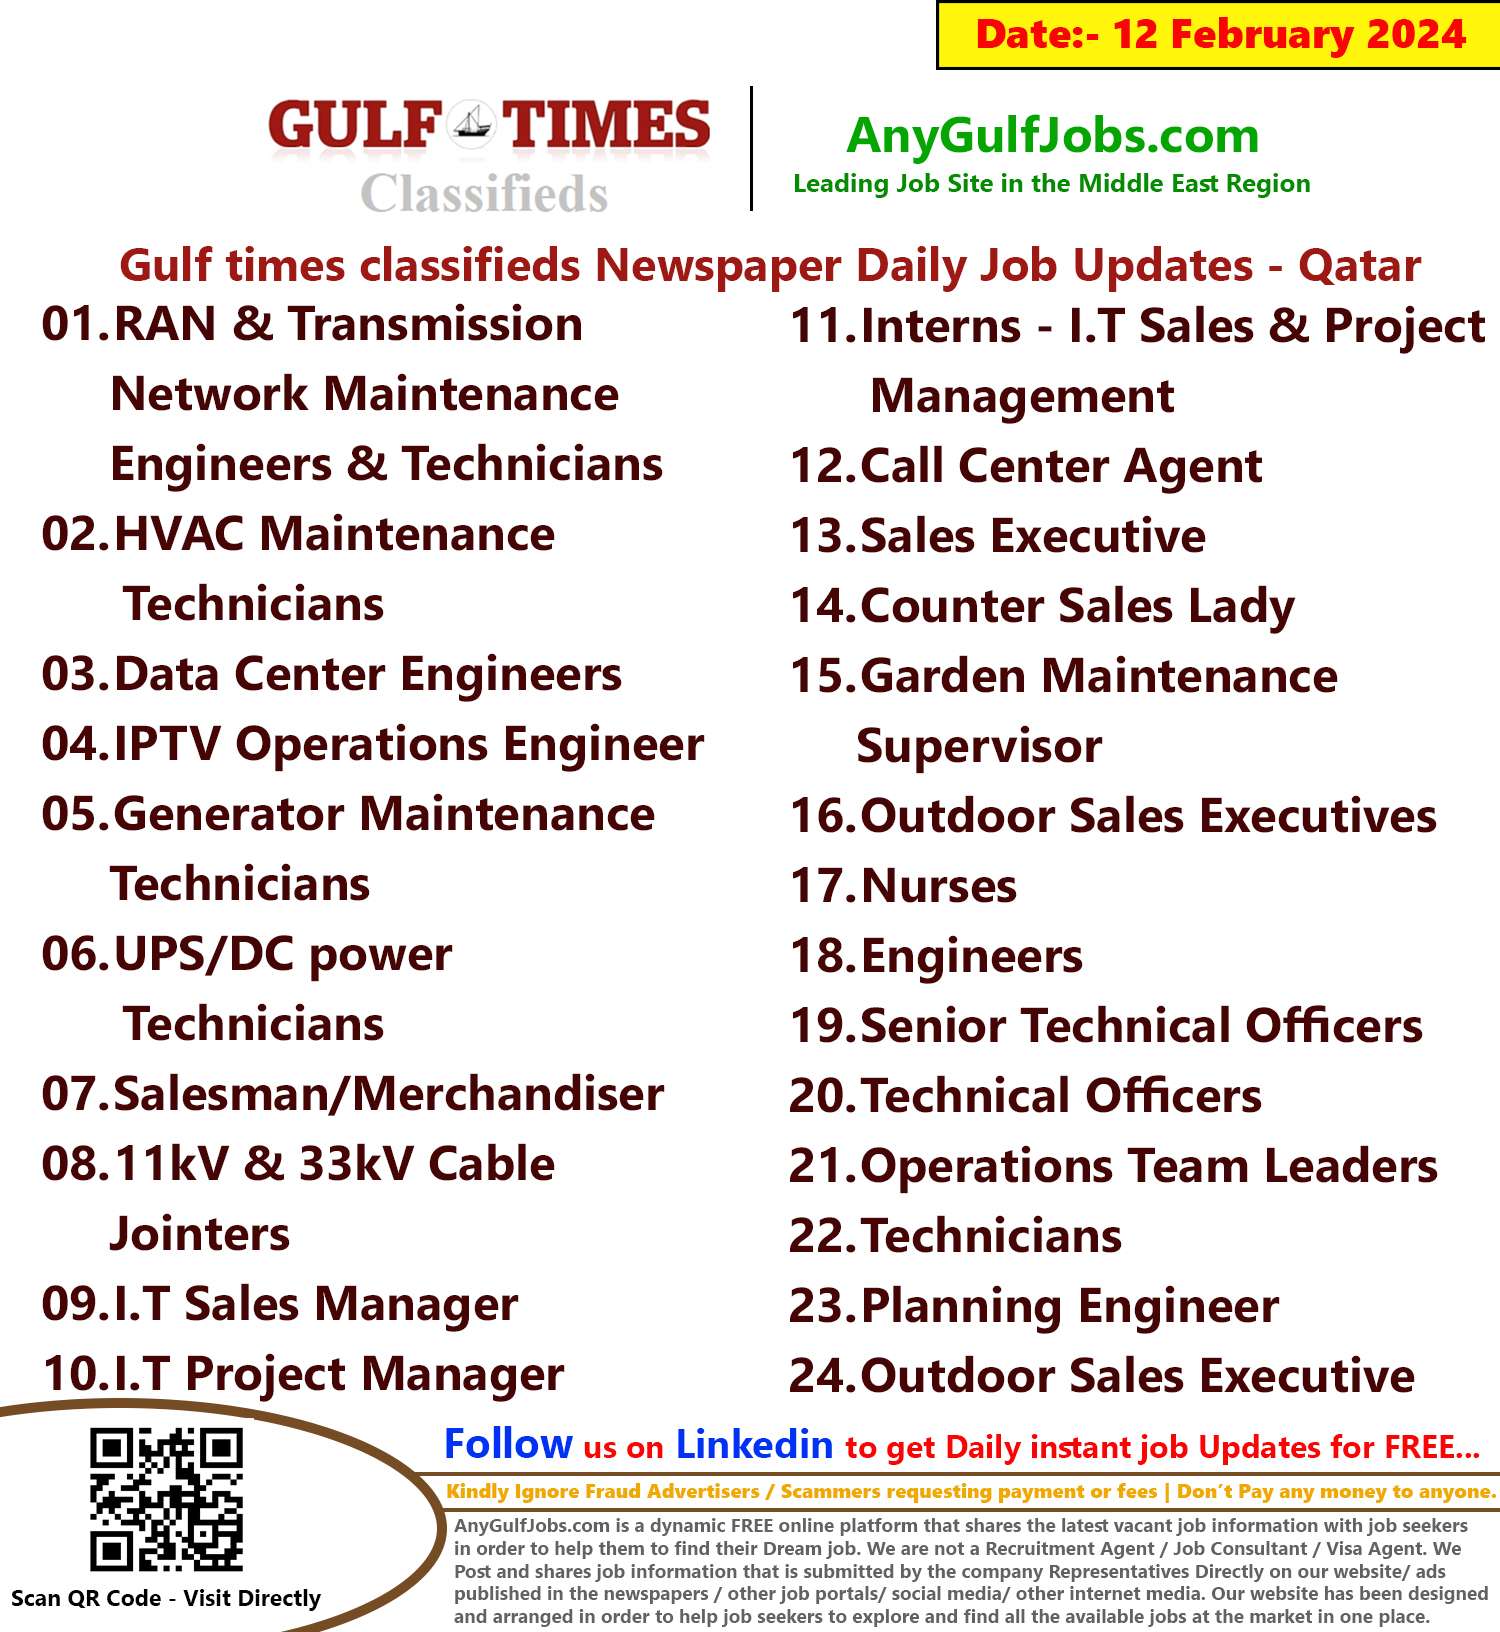 Gulf Times Classifieds Job Vacancies Qatar - 12 February 2024